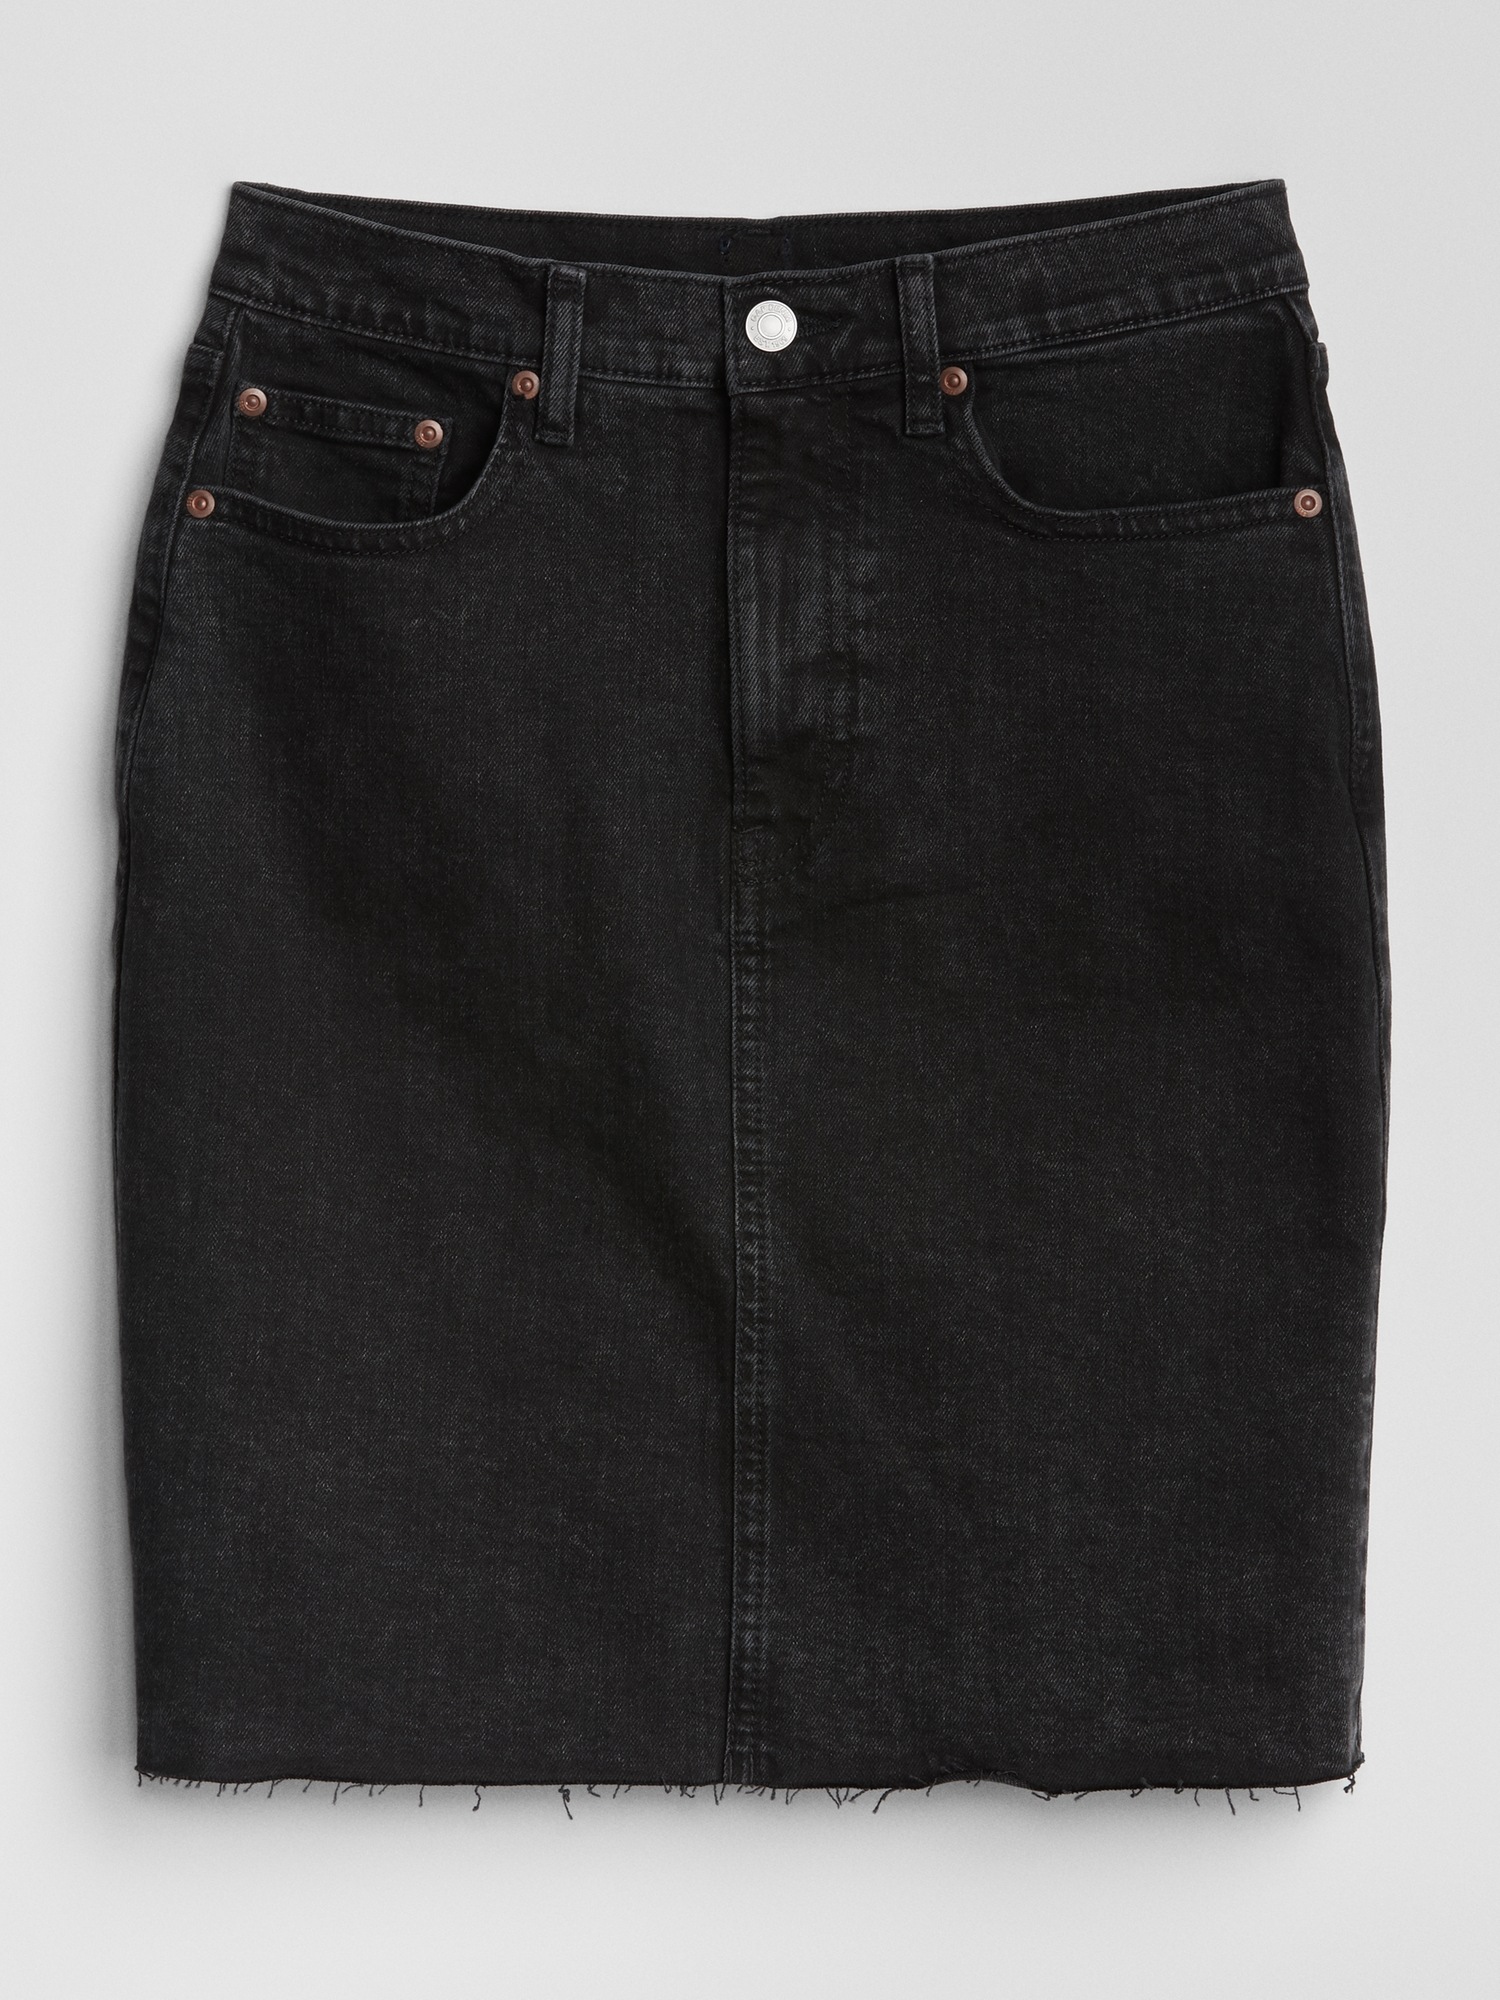 Women Open Crotch Tassel Pencil Micro Mini Jeans Skirt Tight Hip